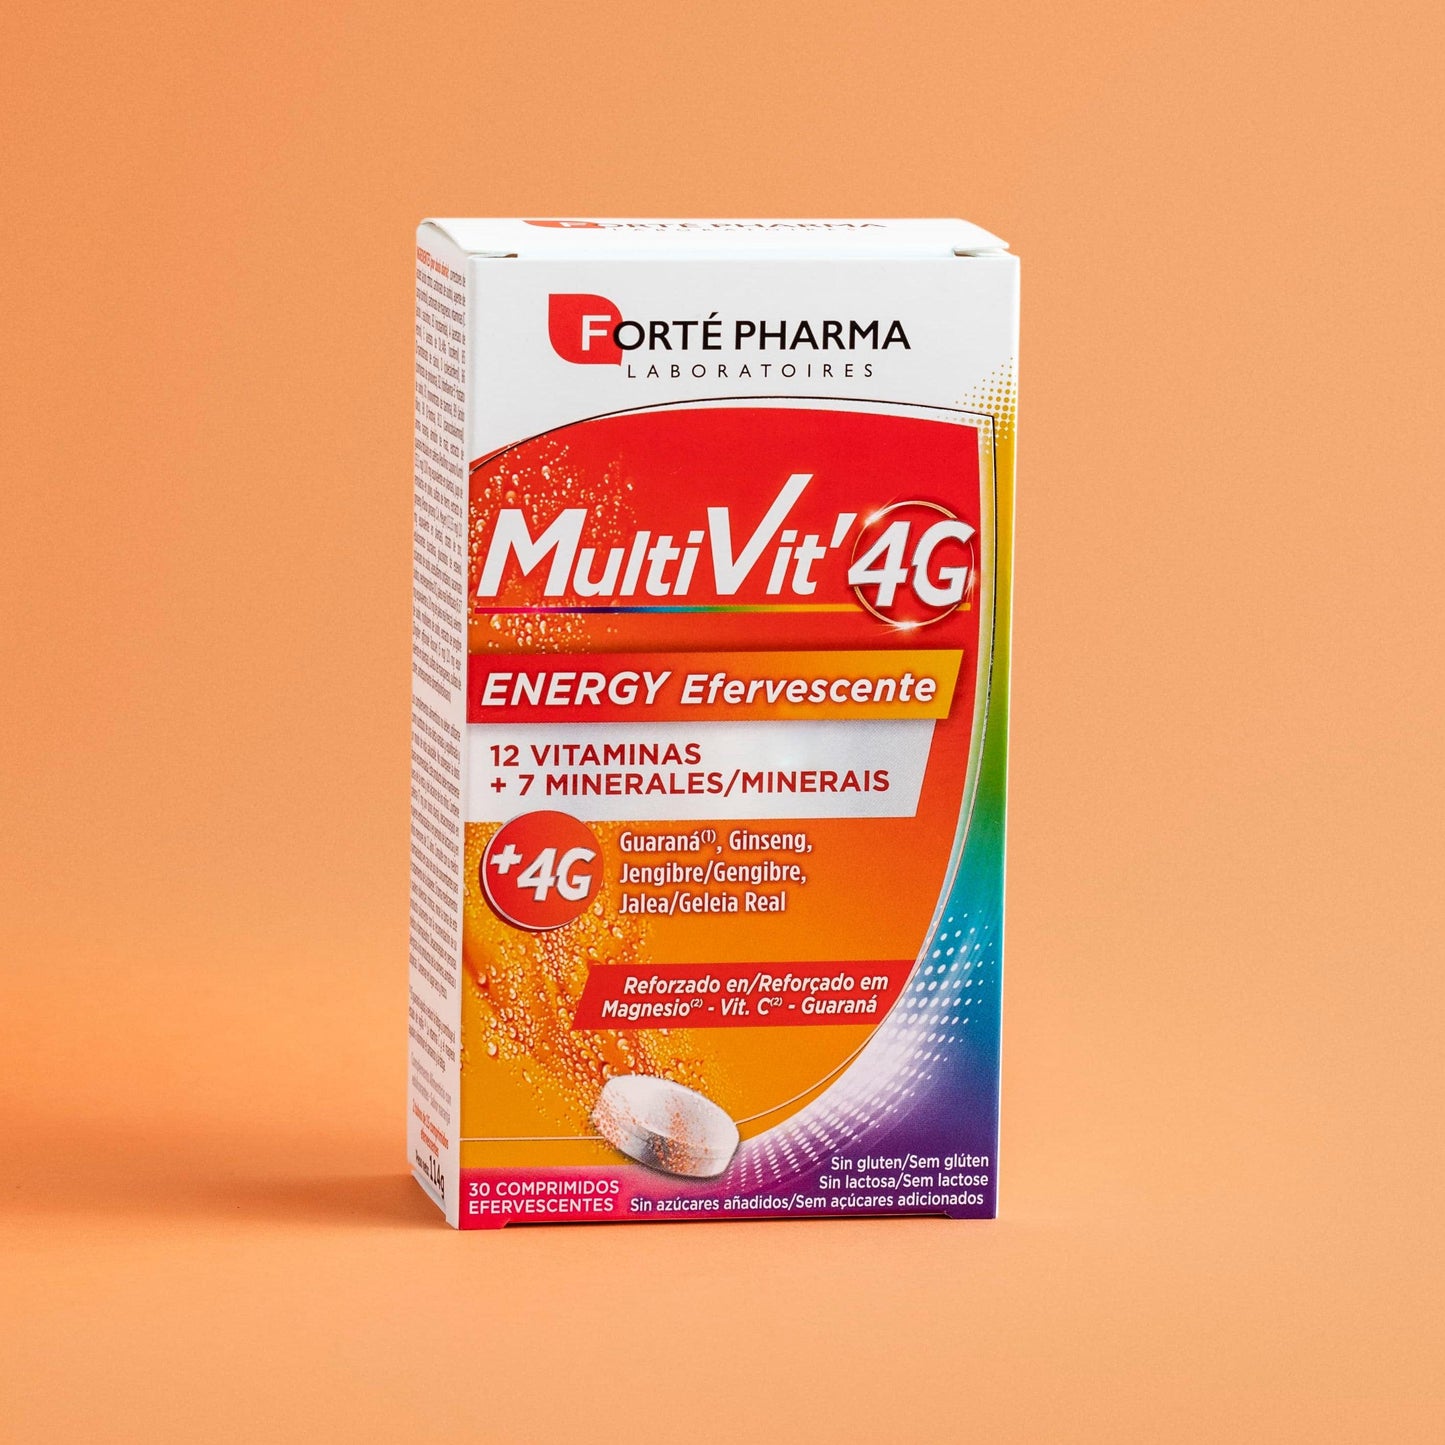 multivit 4g energy efervescente-Forté Pharma